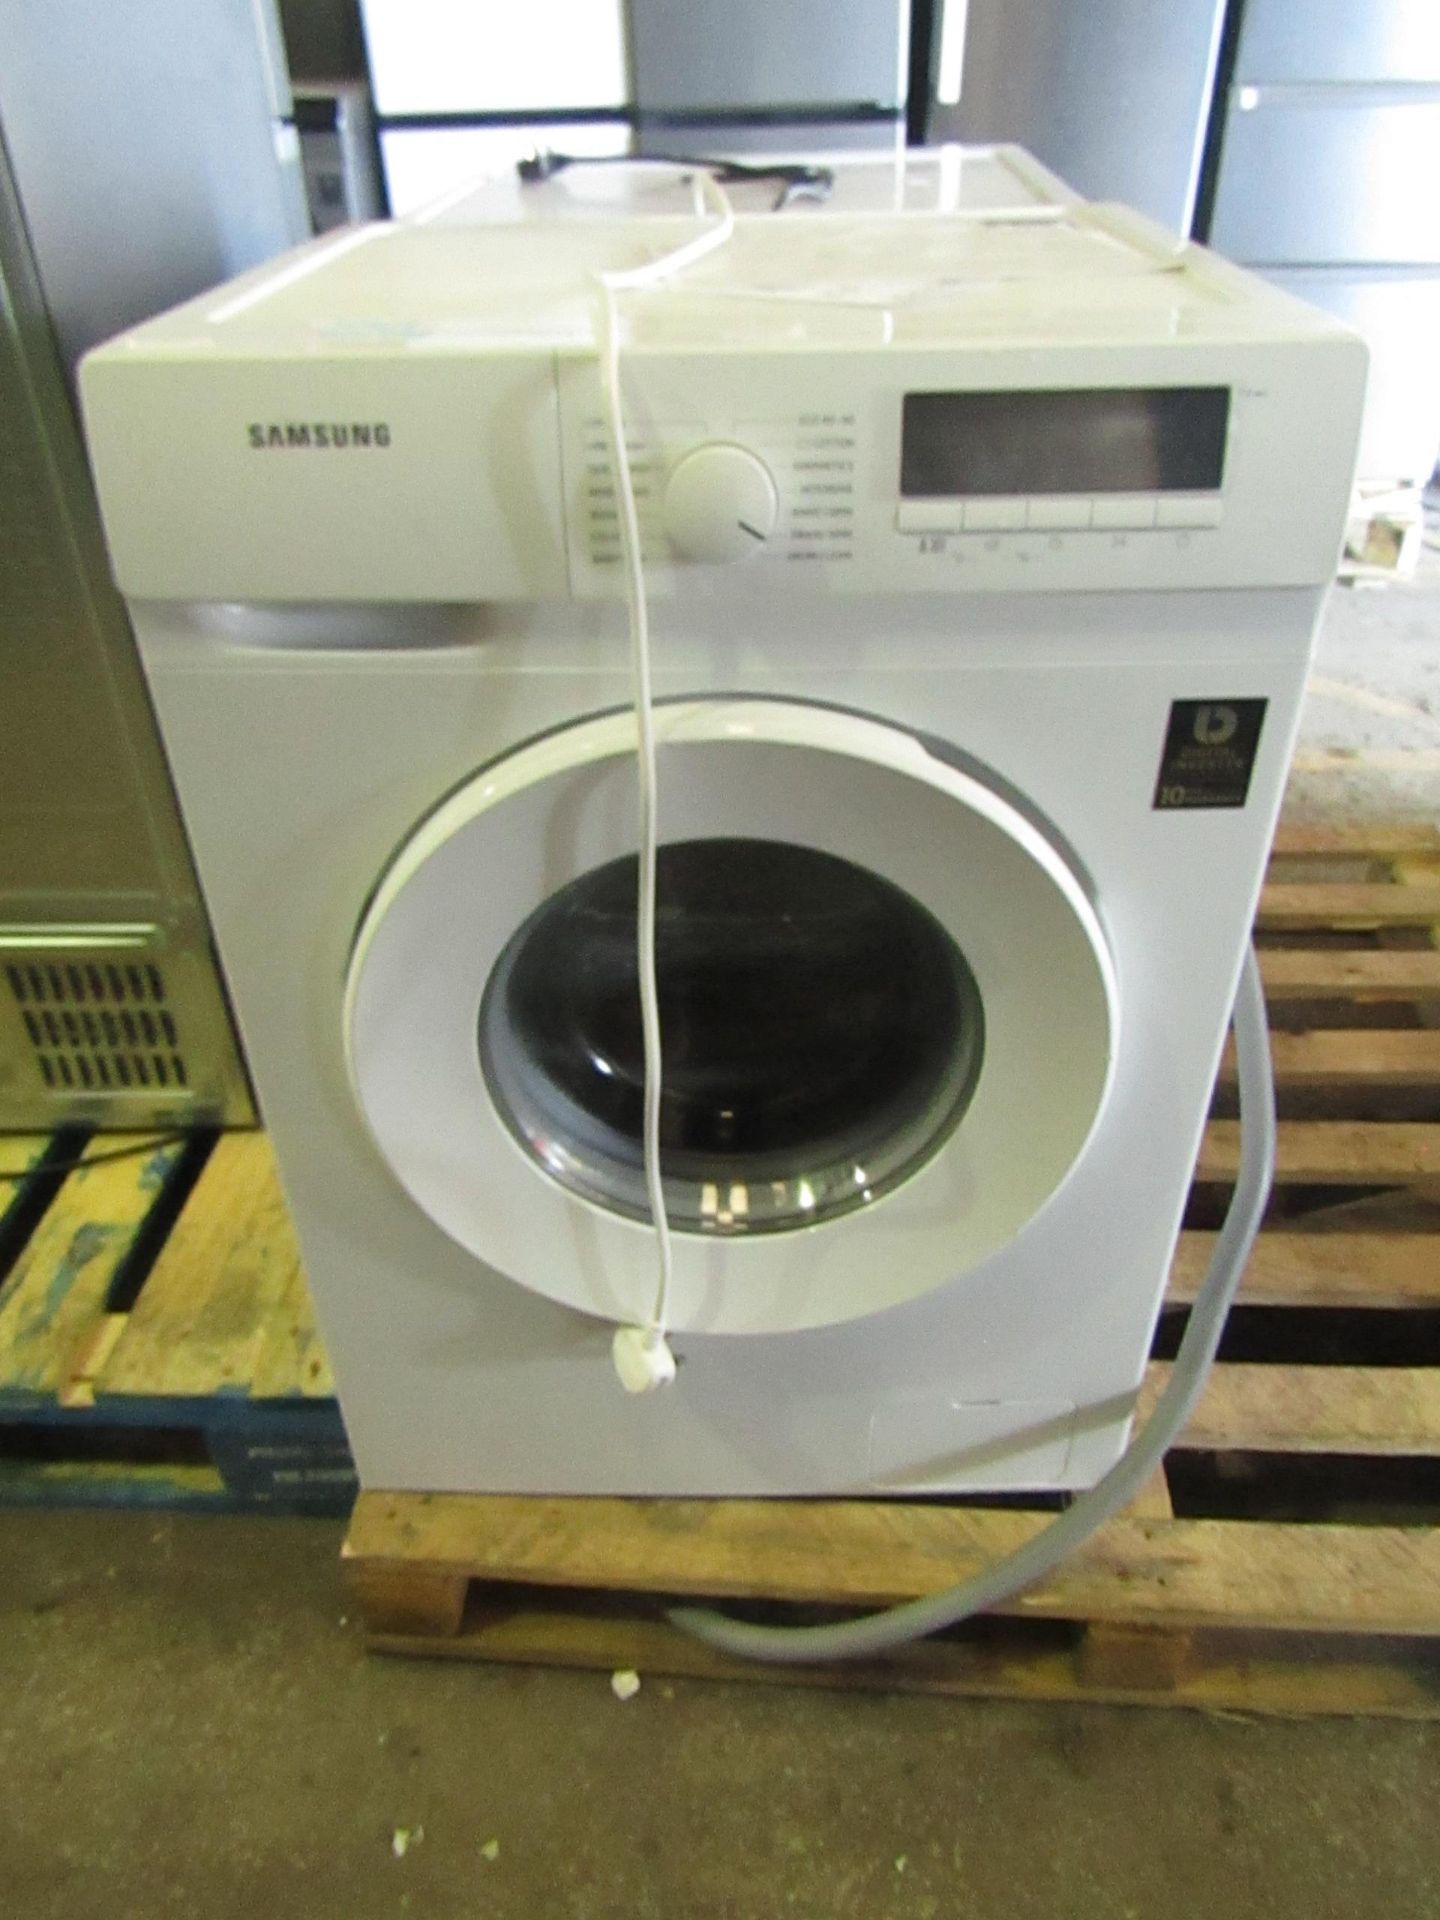 Samsung 9KG Washing Machine in White, Model: WW90T304MWW/EU - Tested Working - RRP ?459.99.